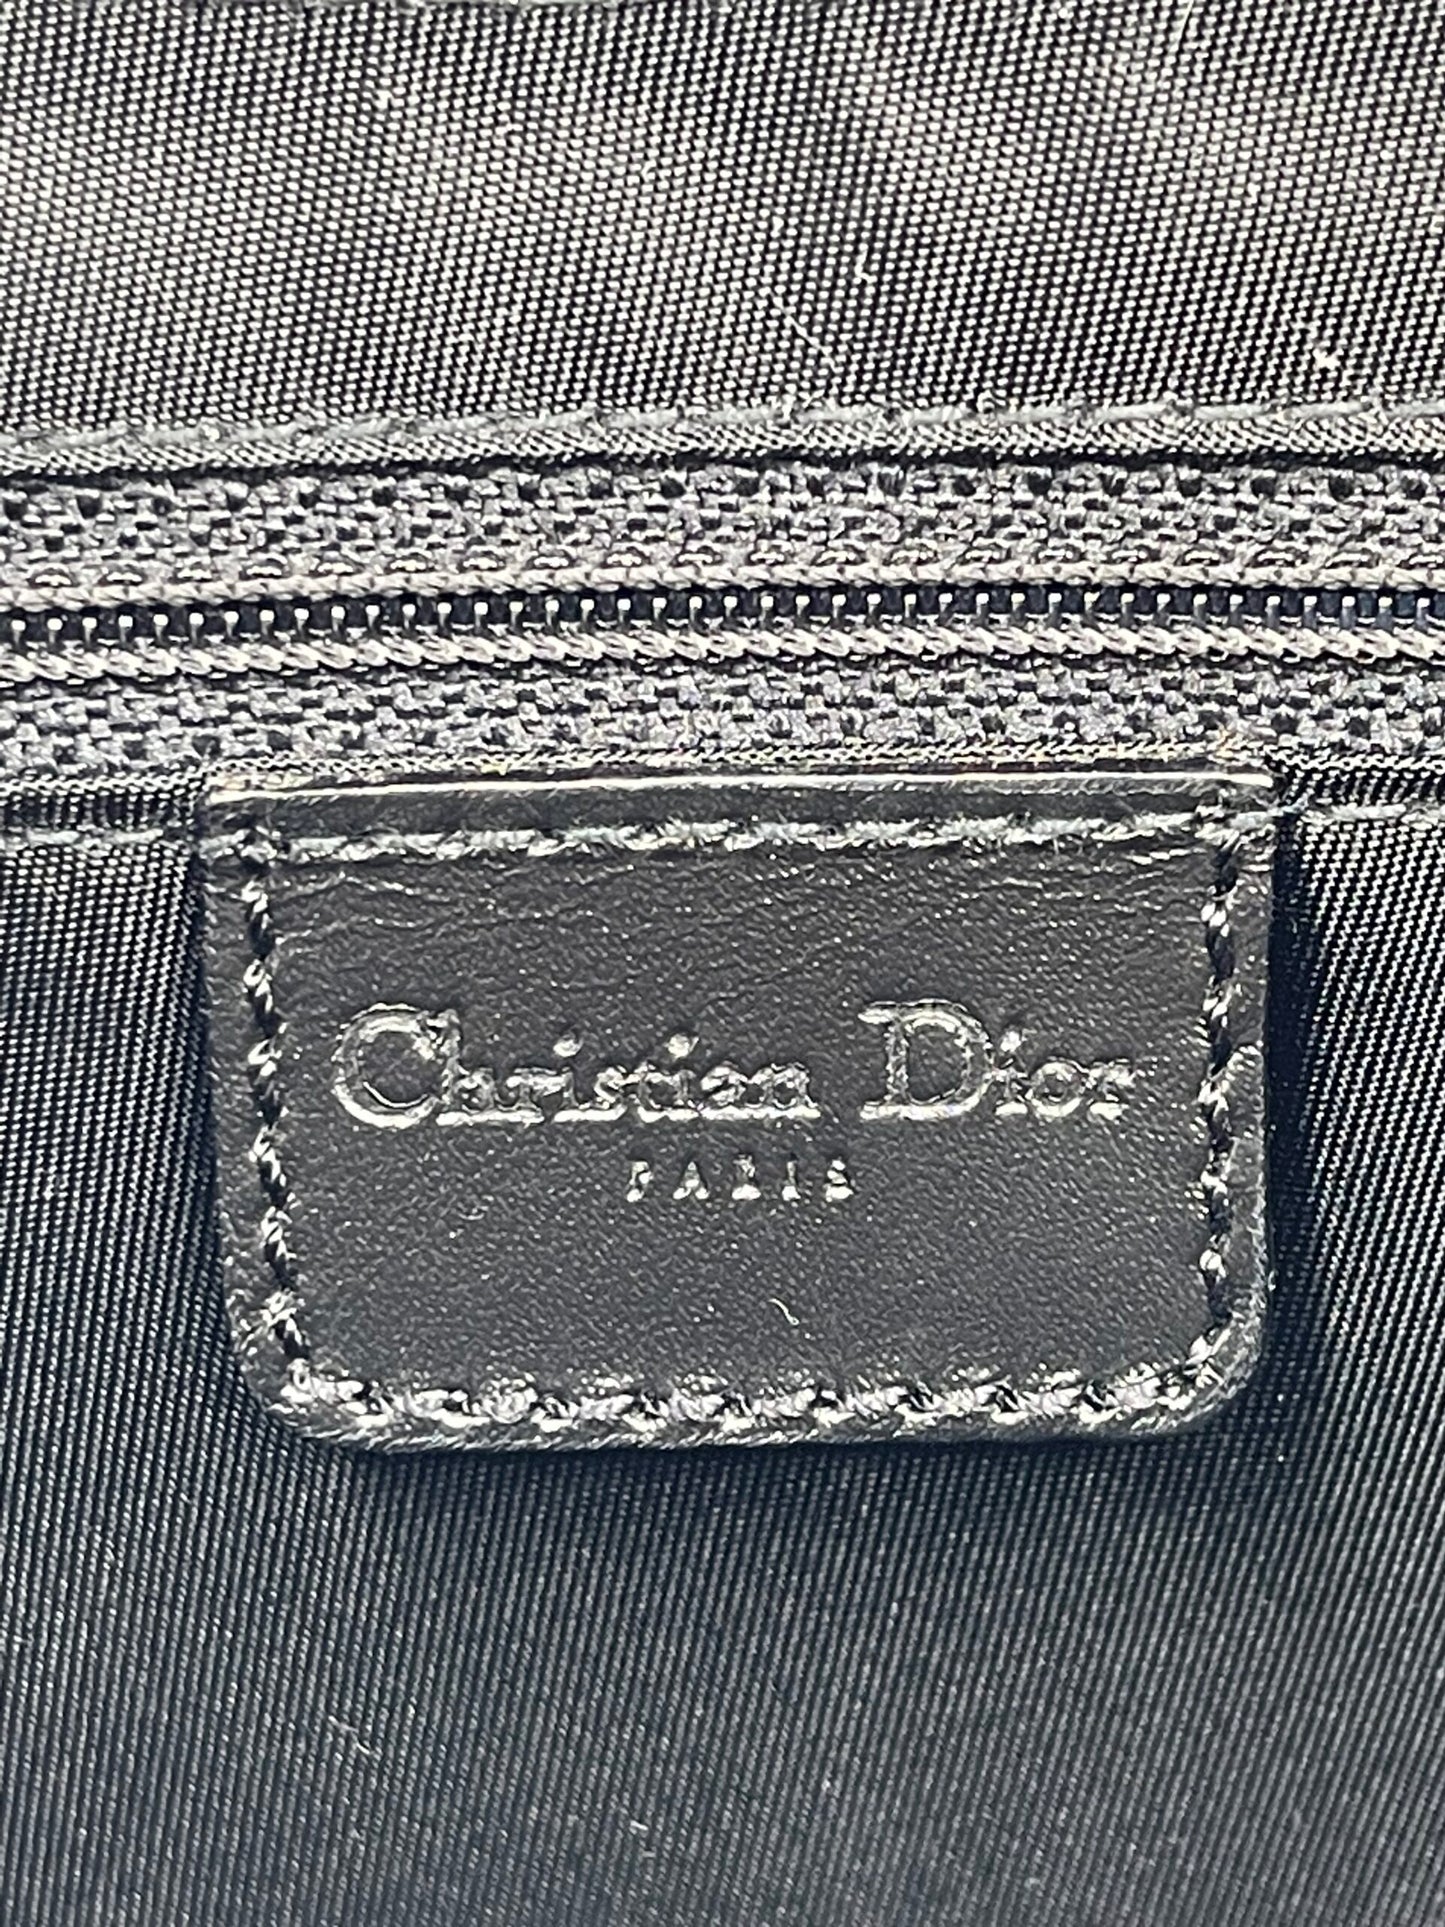 Christian Dior Columbus tessuto pelle nera usata